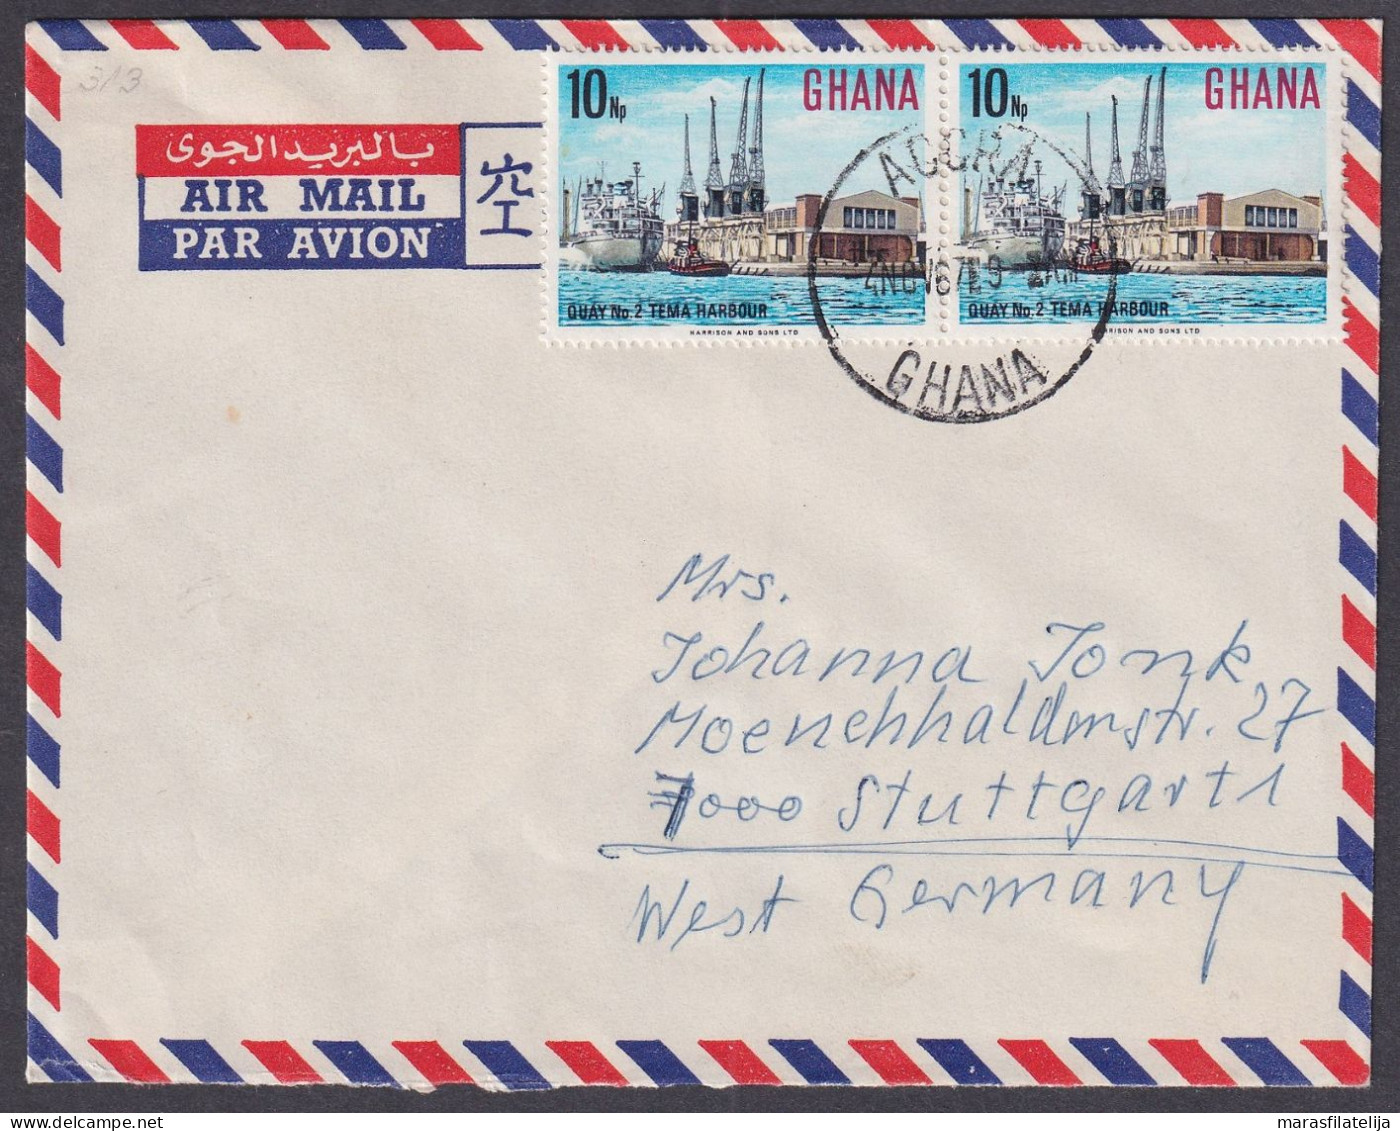 Ghana 1967, Quay No 2 Tema Harbour, Airmail To Germany - Ghana (1957-...)